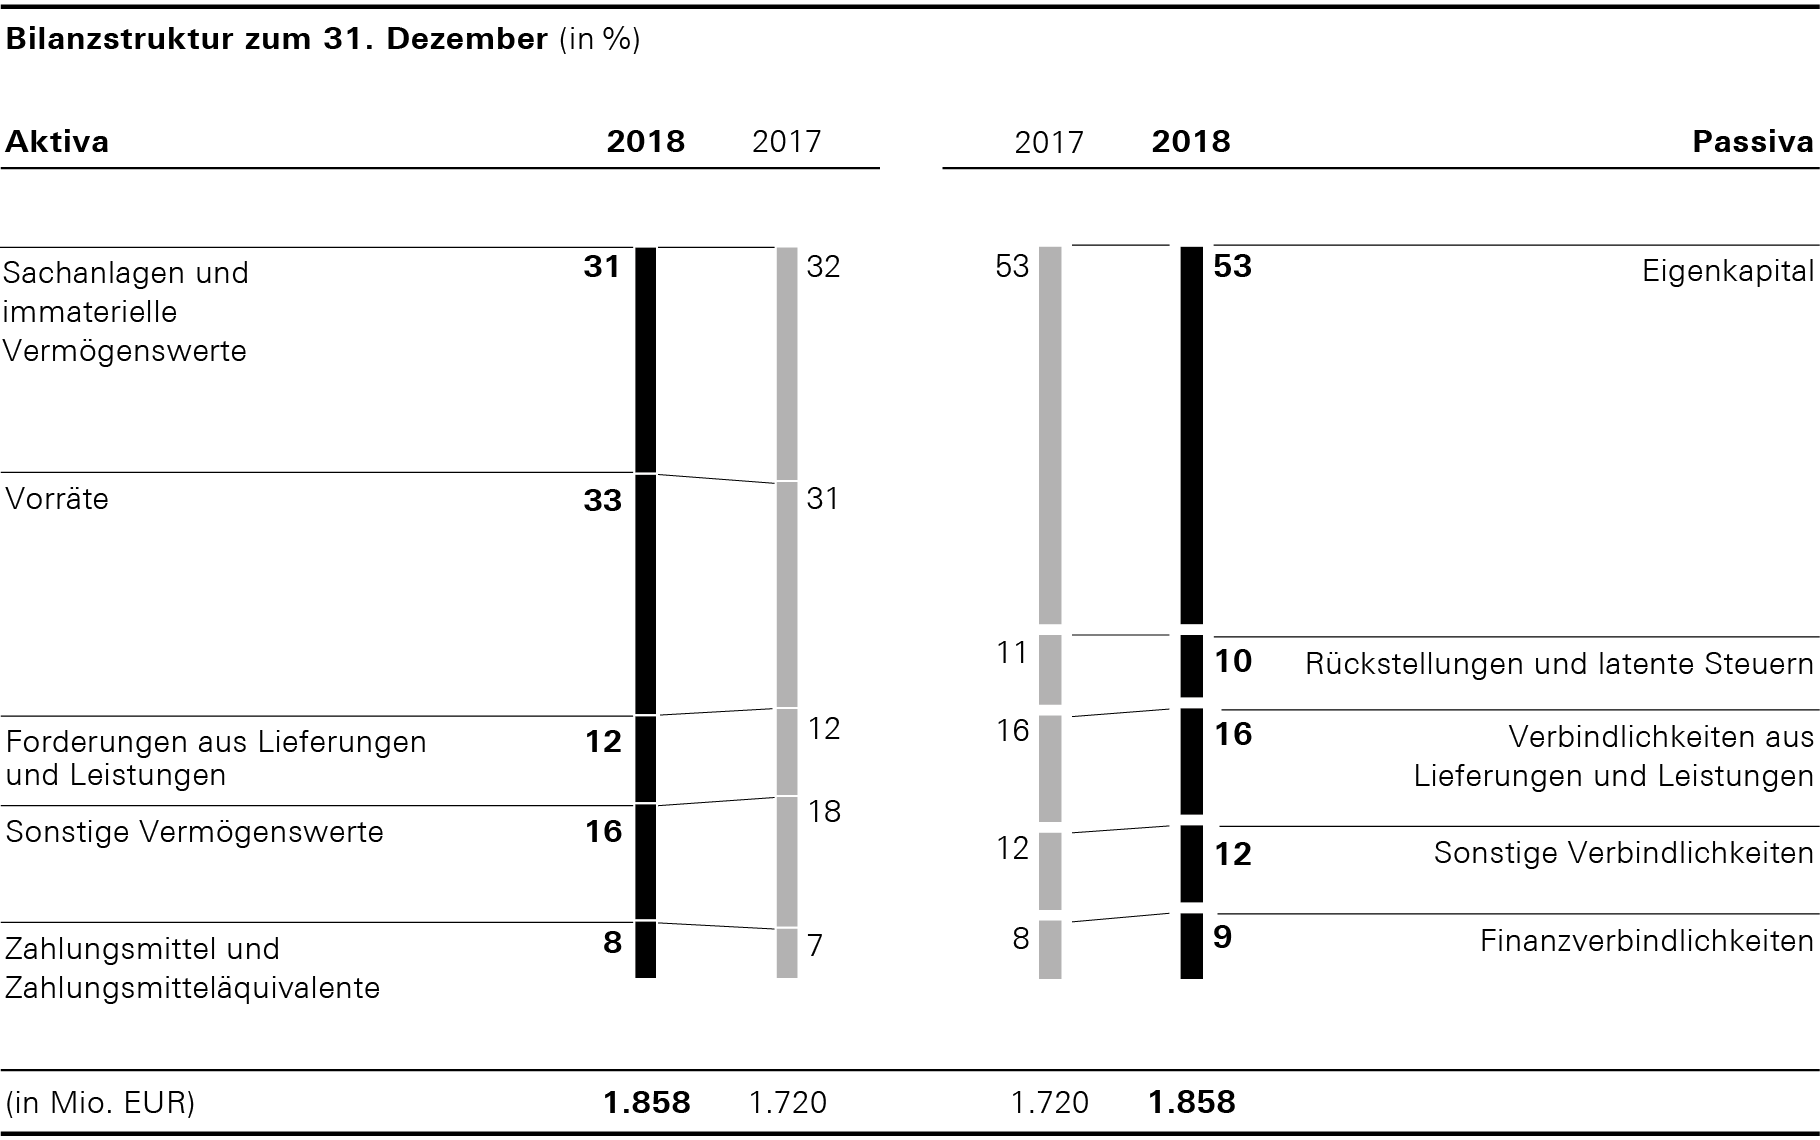 Bilanzstruktur zum 31. Dezember (Balkendiagramm)